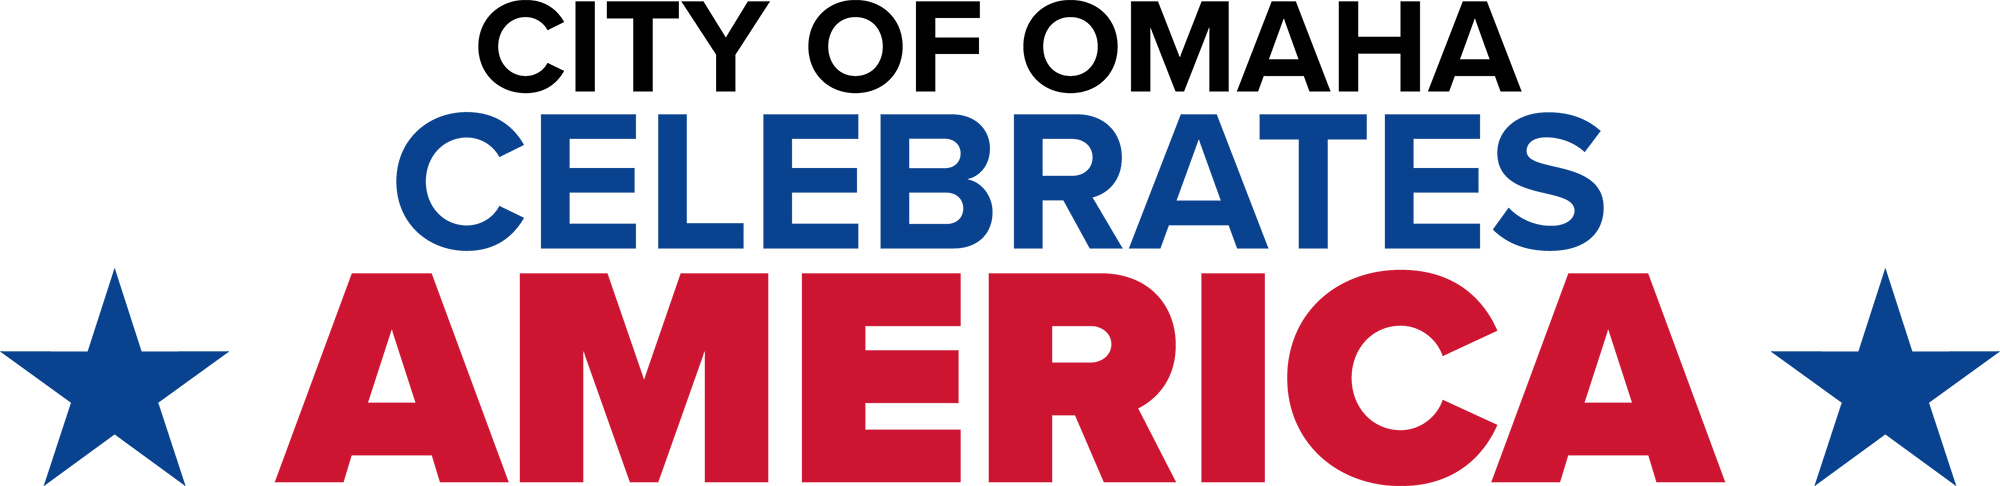 City of Omaha Celebrates America